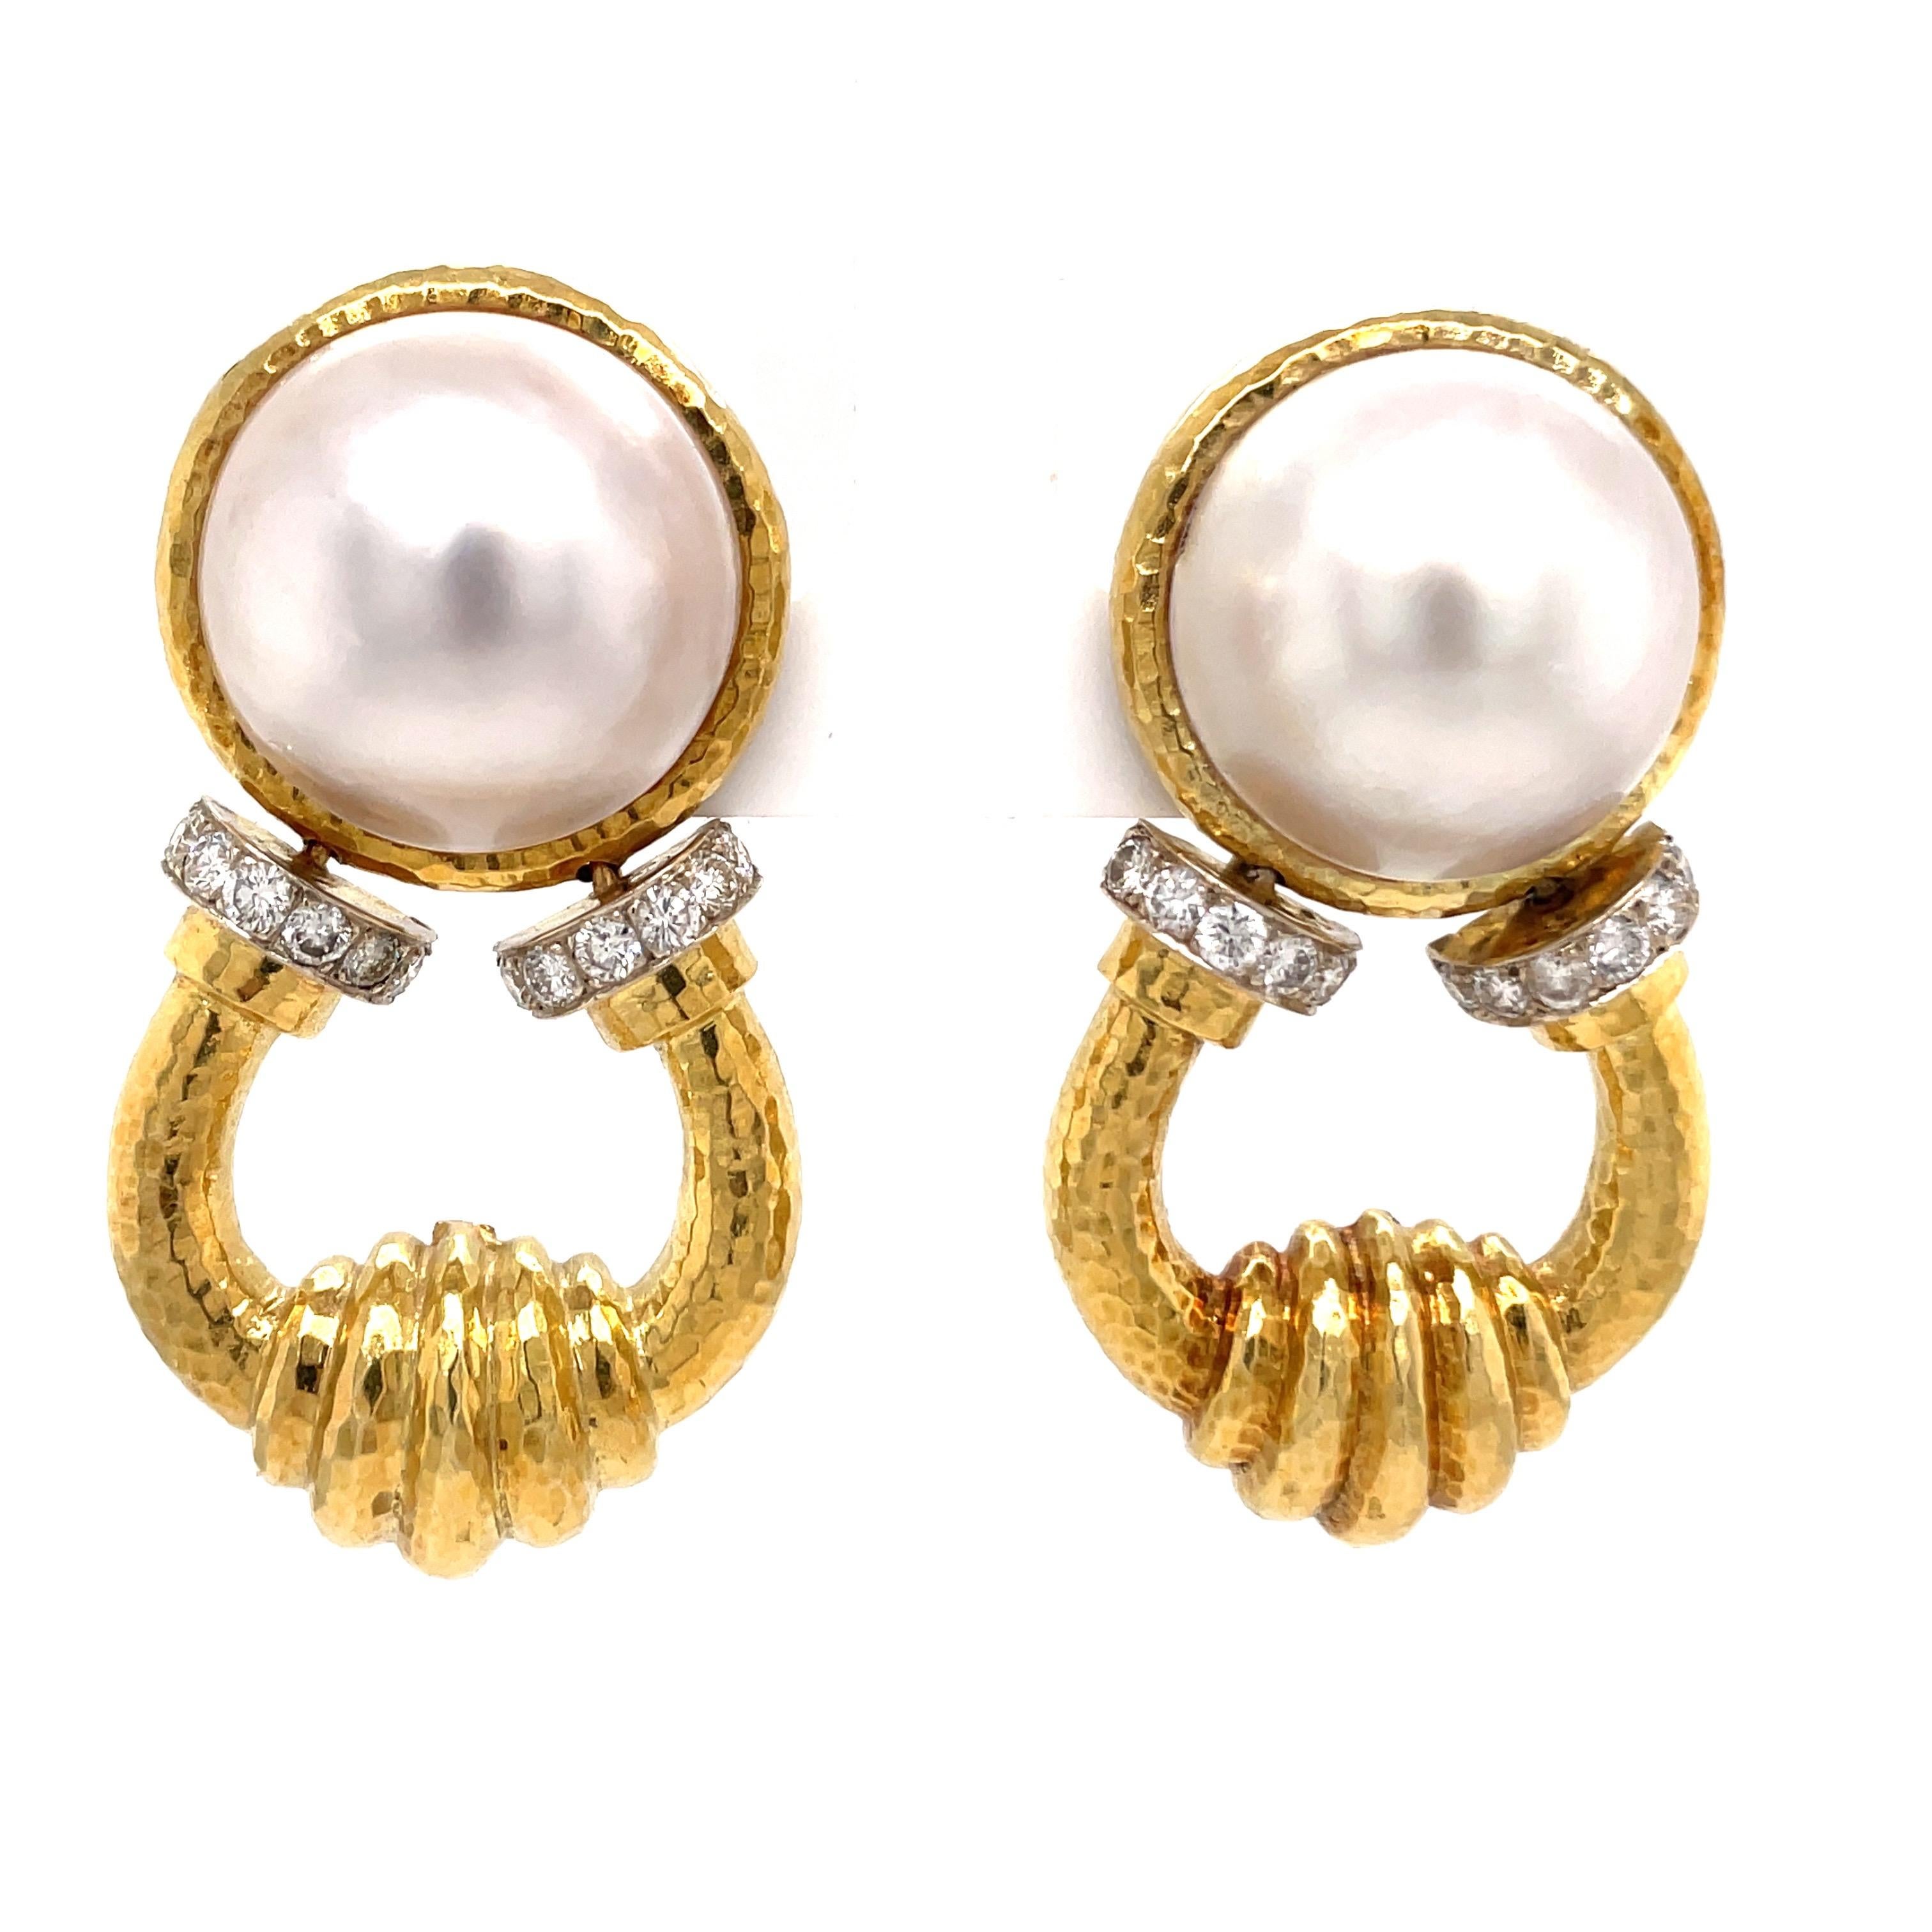 18 Karat Yellow Gold Doorknocker earrings featuring two mob pearls in a hammer motif weighing 41.1 grams.  